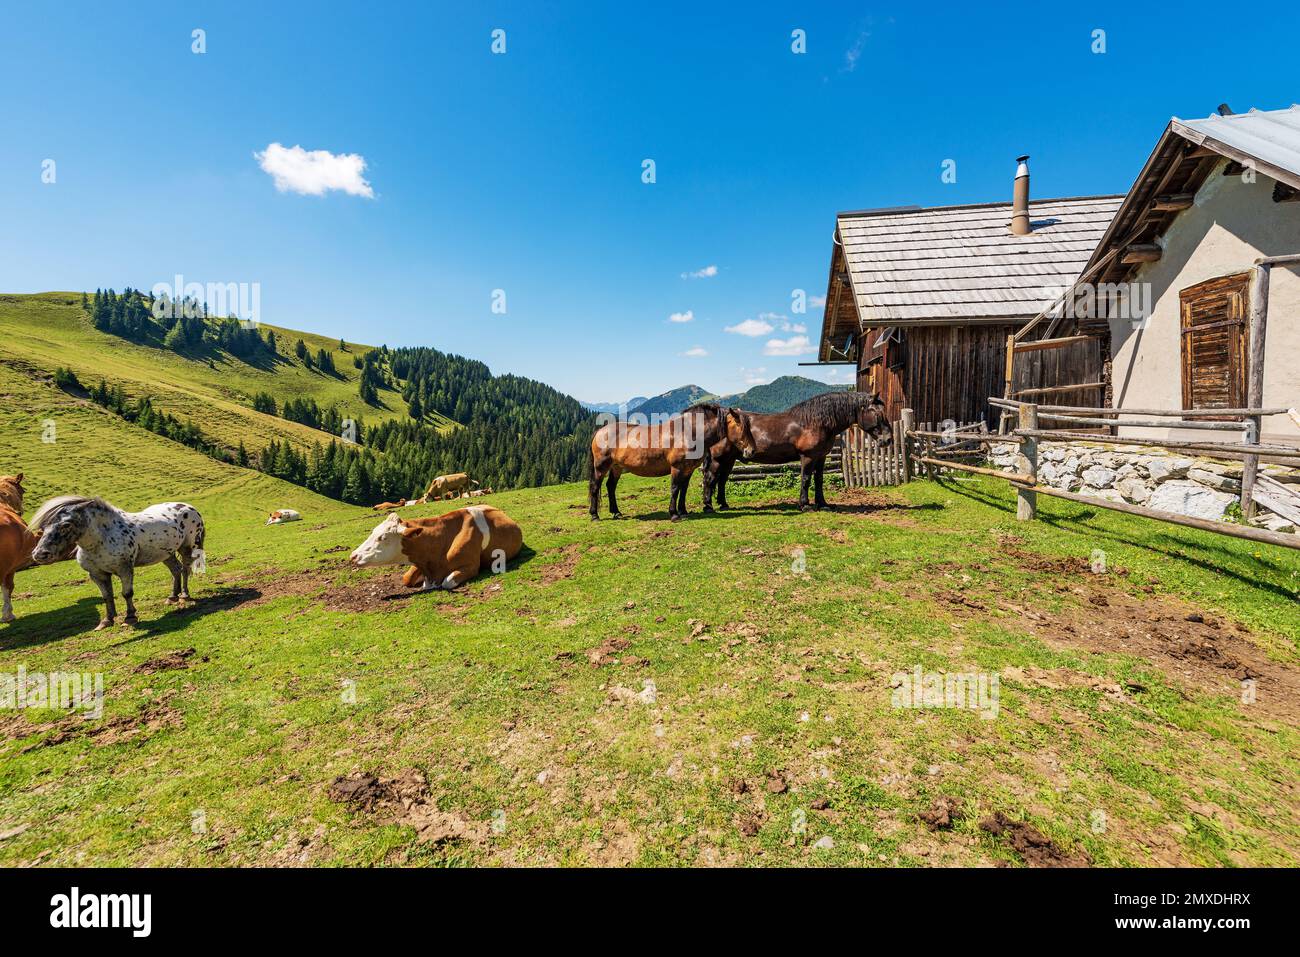 Dairy cows and horses on a mountain pasture, Italy-Austria border, Feistritz an der Gail municipality, Osternig peak, Carinthia, Julian Alps, Austria. Stock Photo